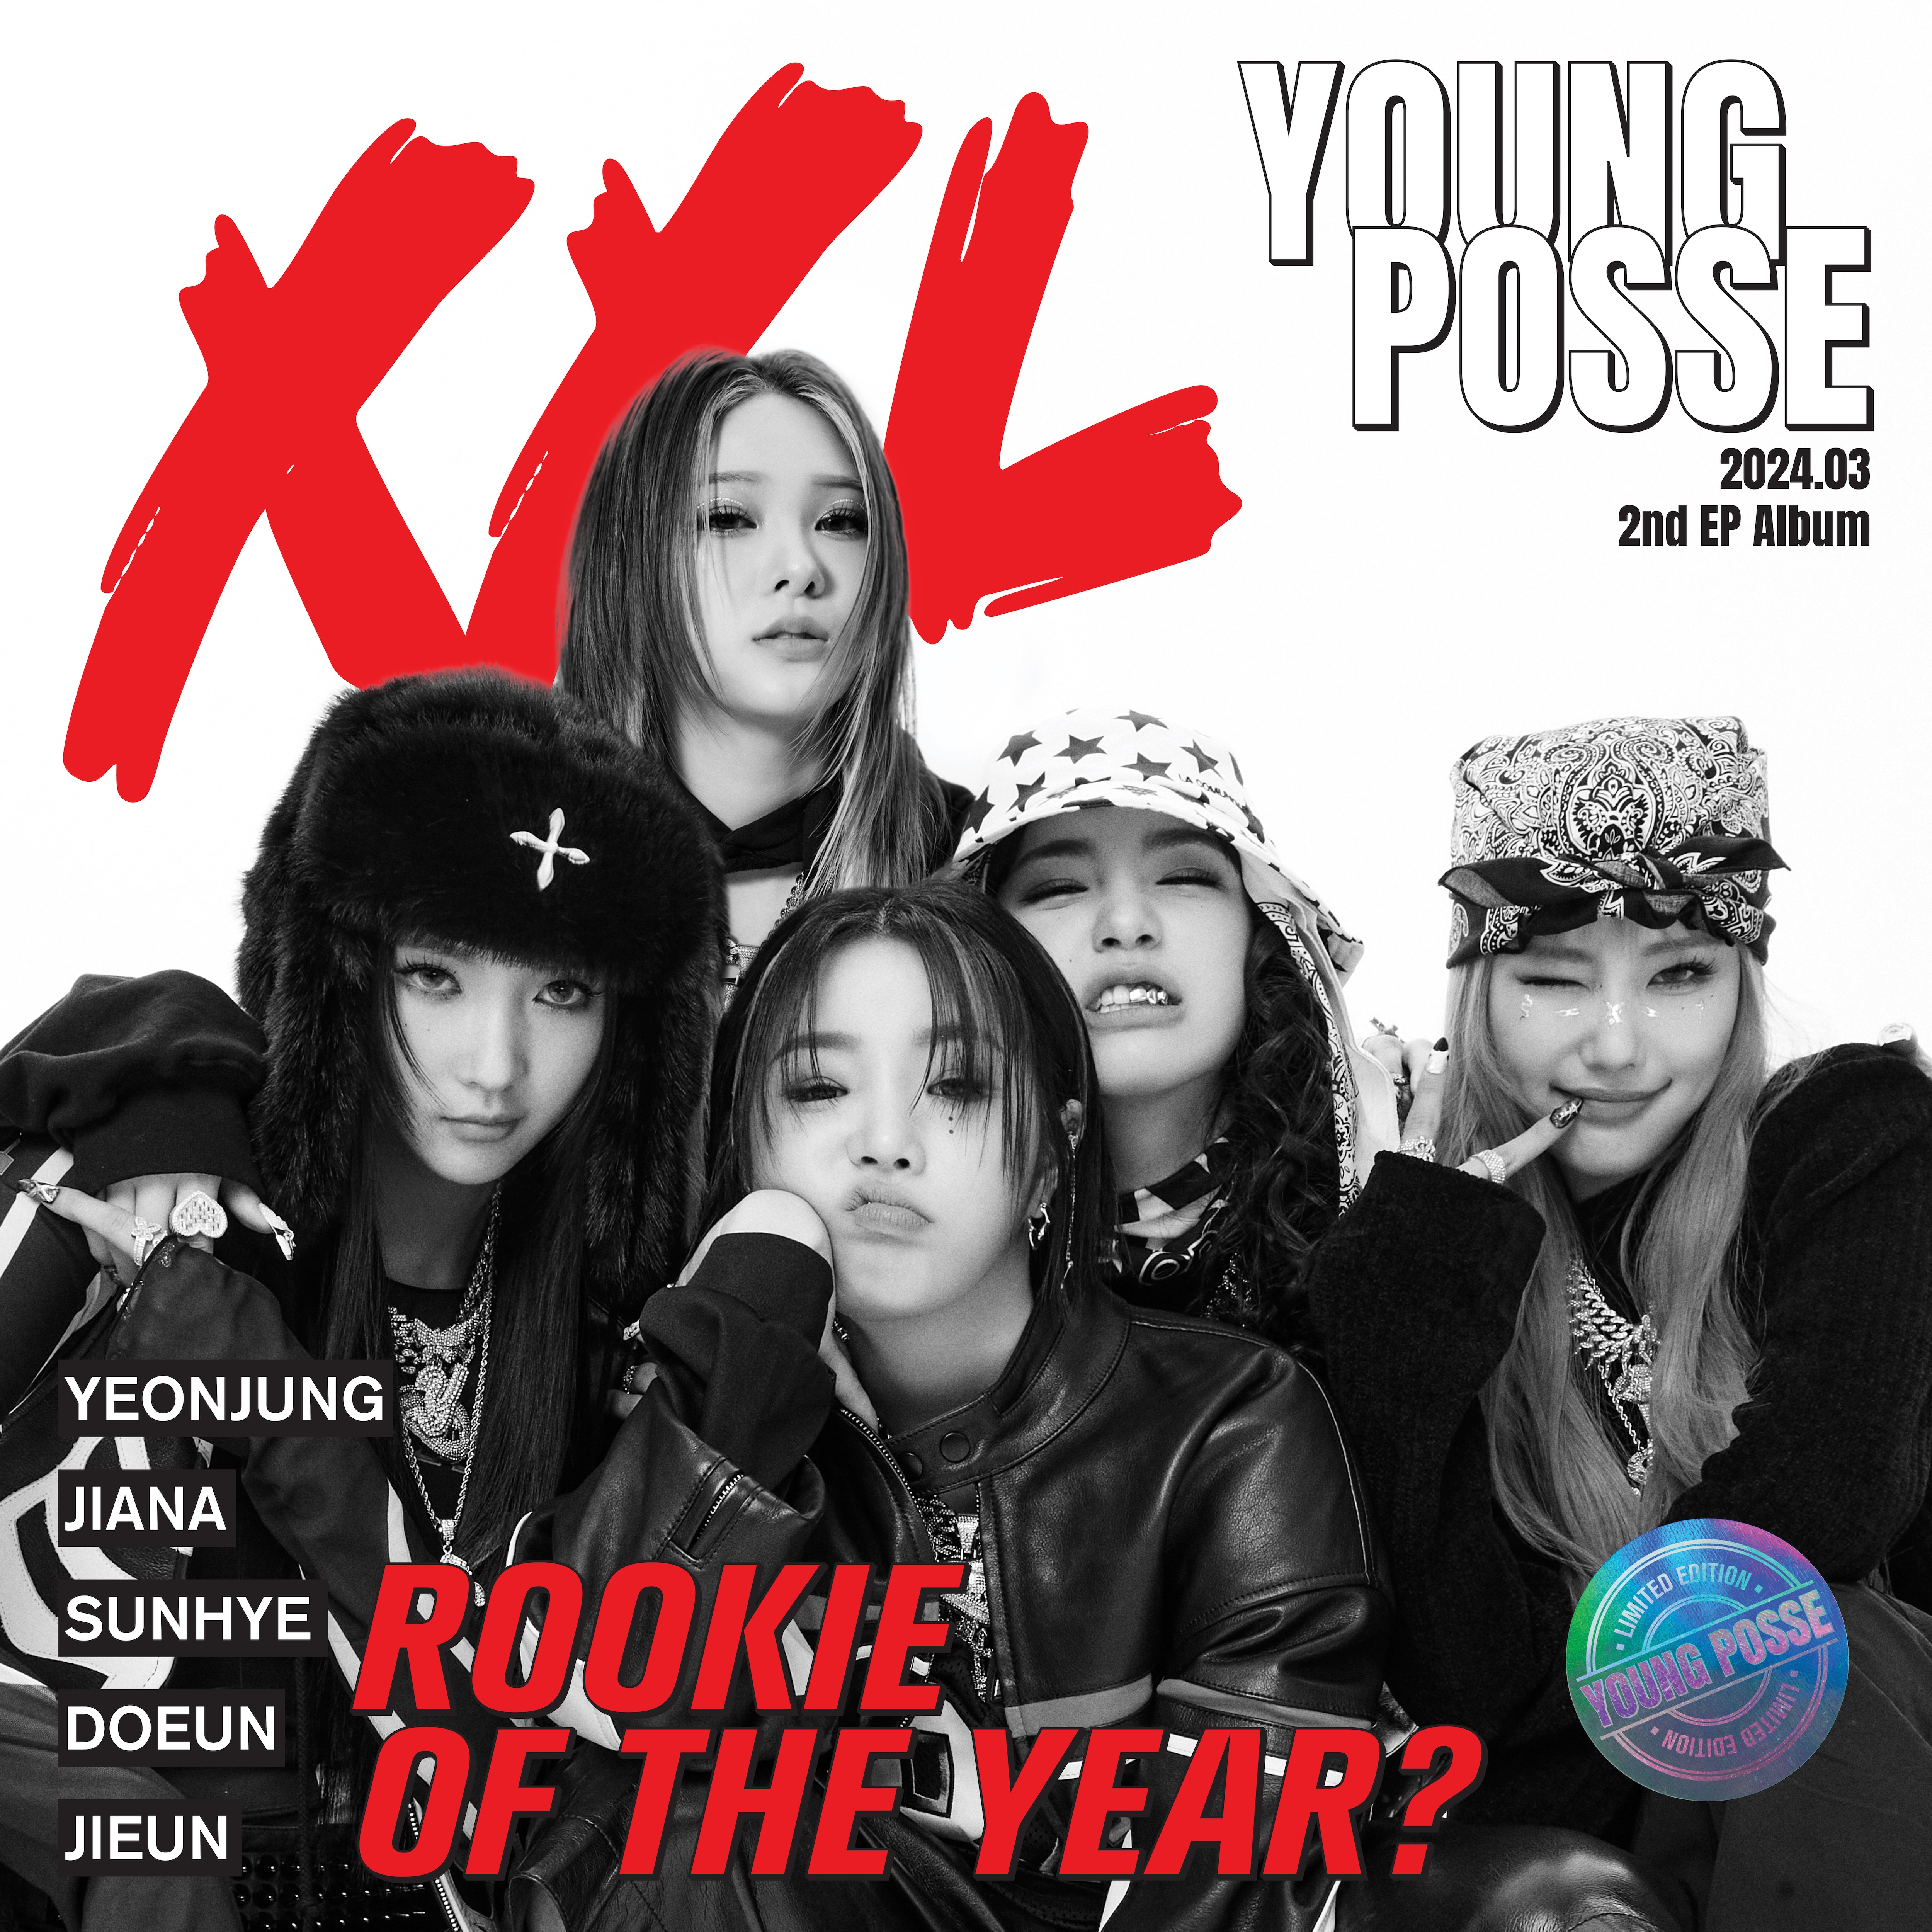 [情報] YOUNG POSSE - XXL